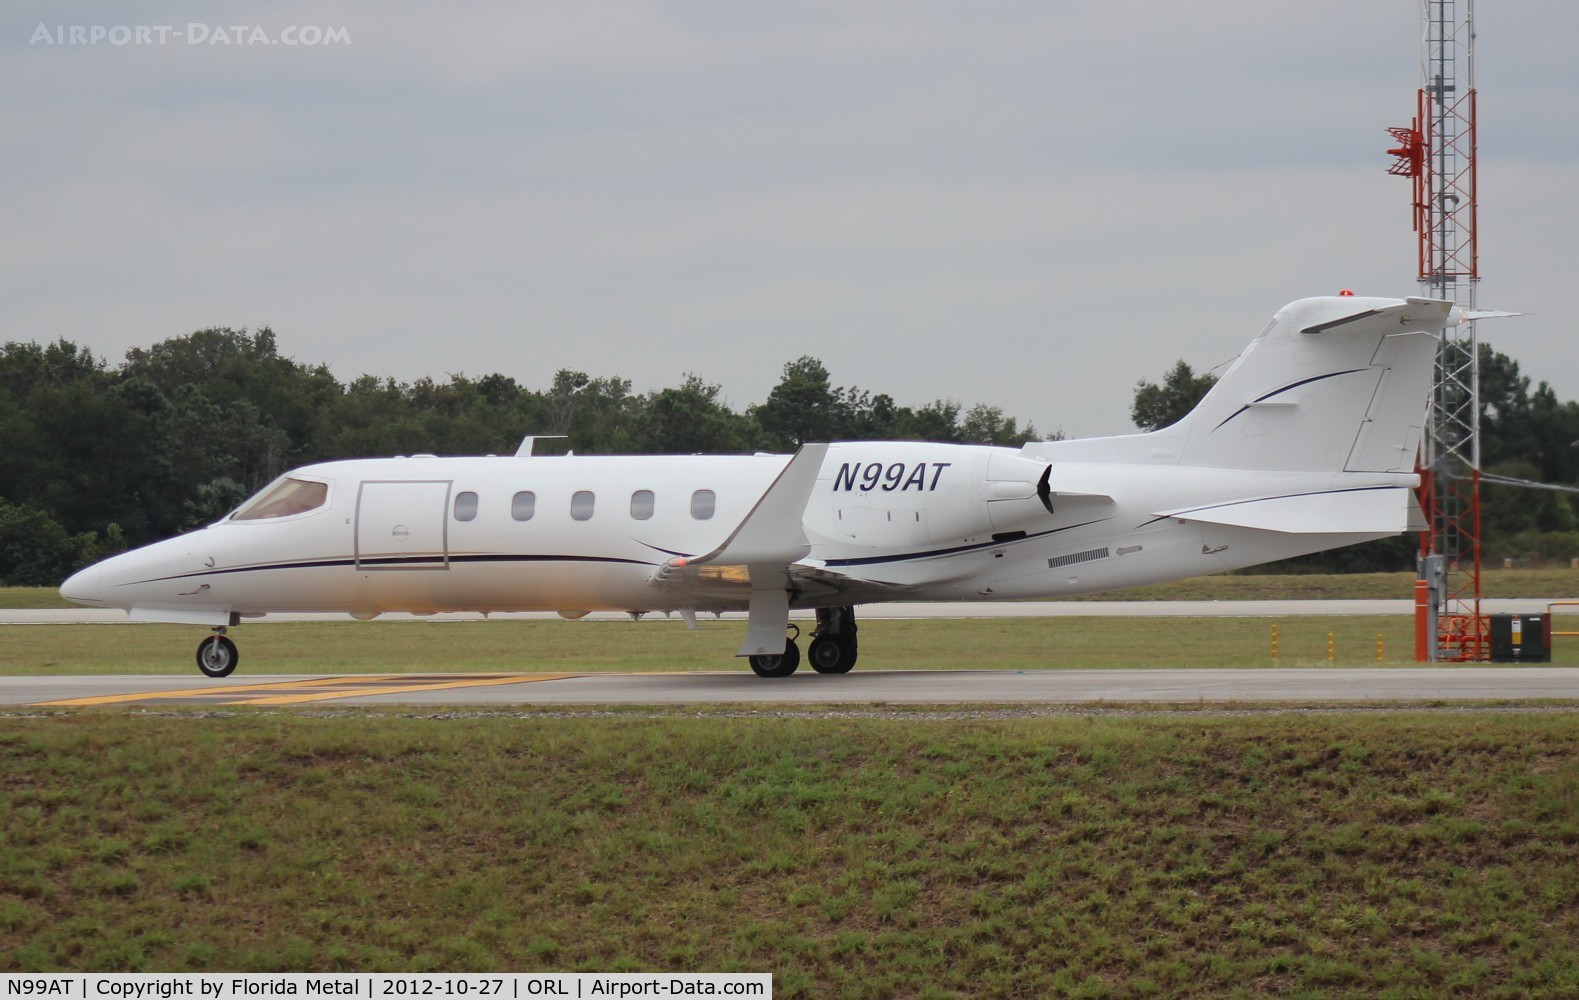 N99AT, 2000 Learjet 31A C/N 31A-202, Lear 31A at NBAA